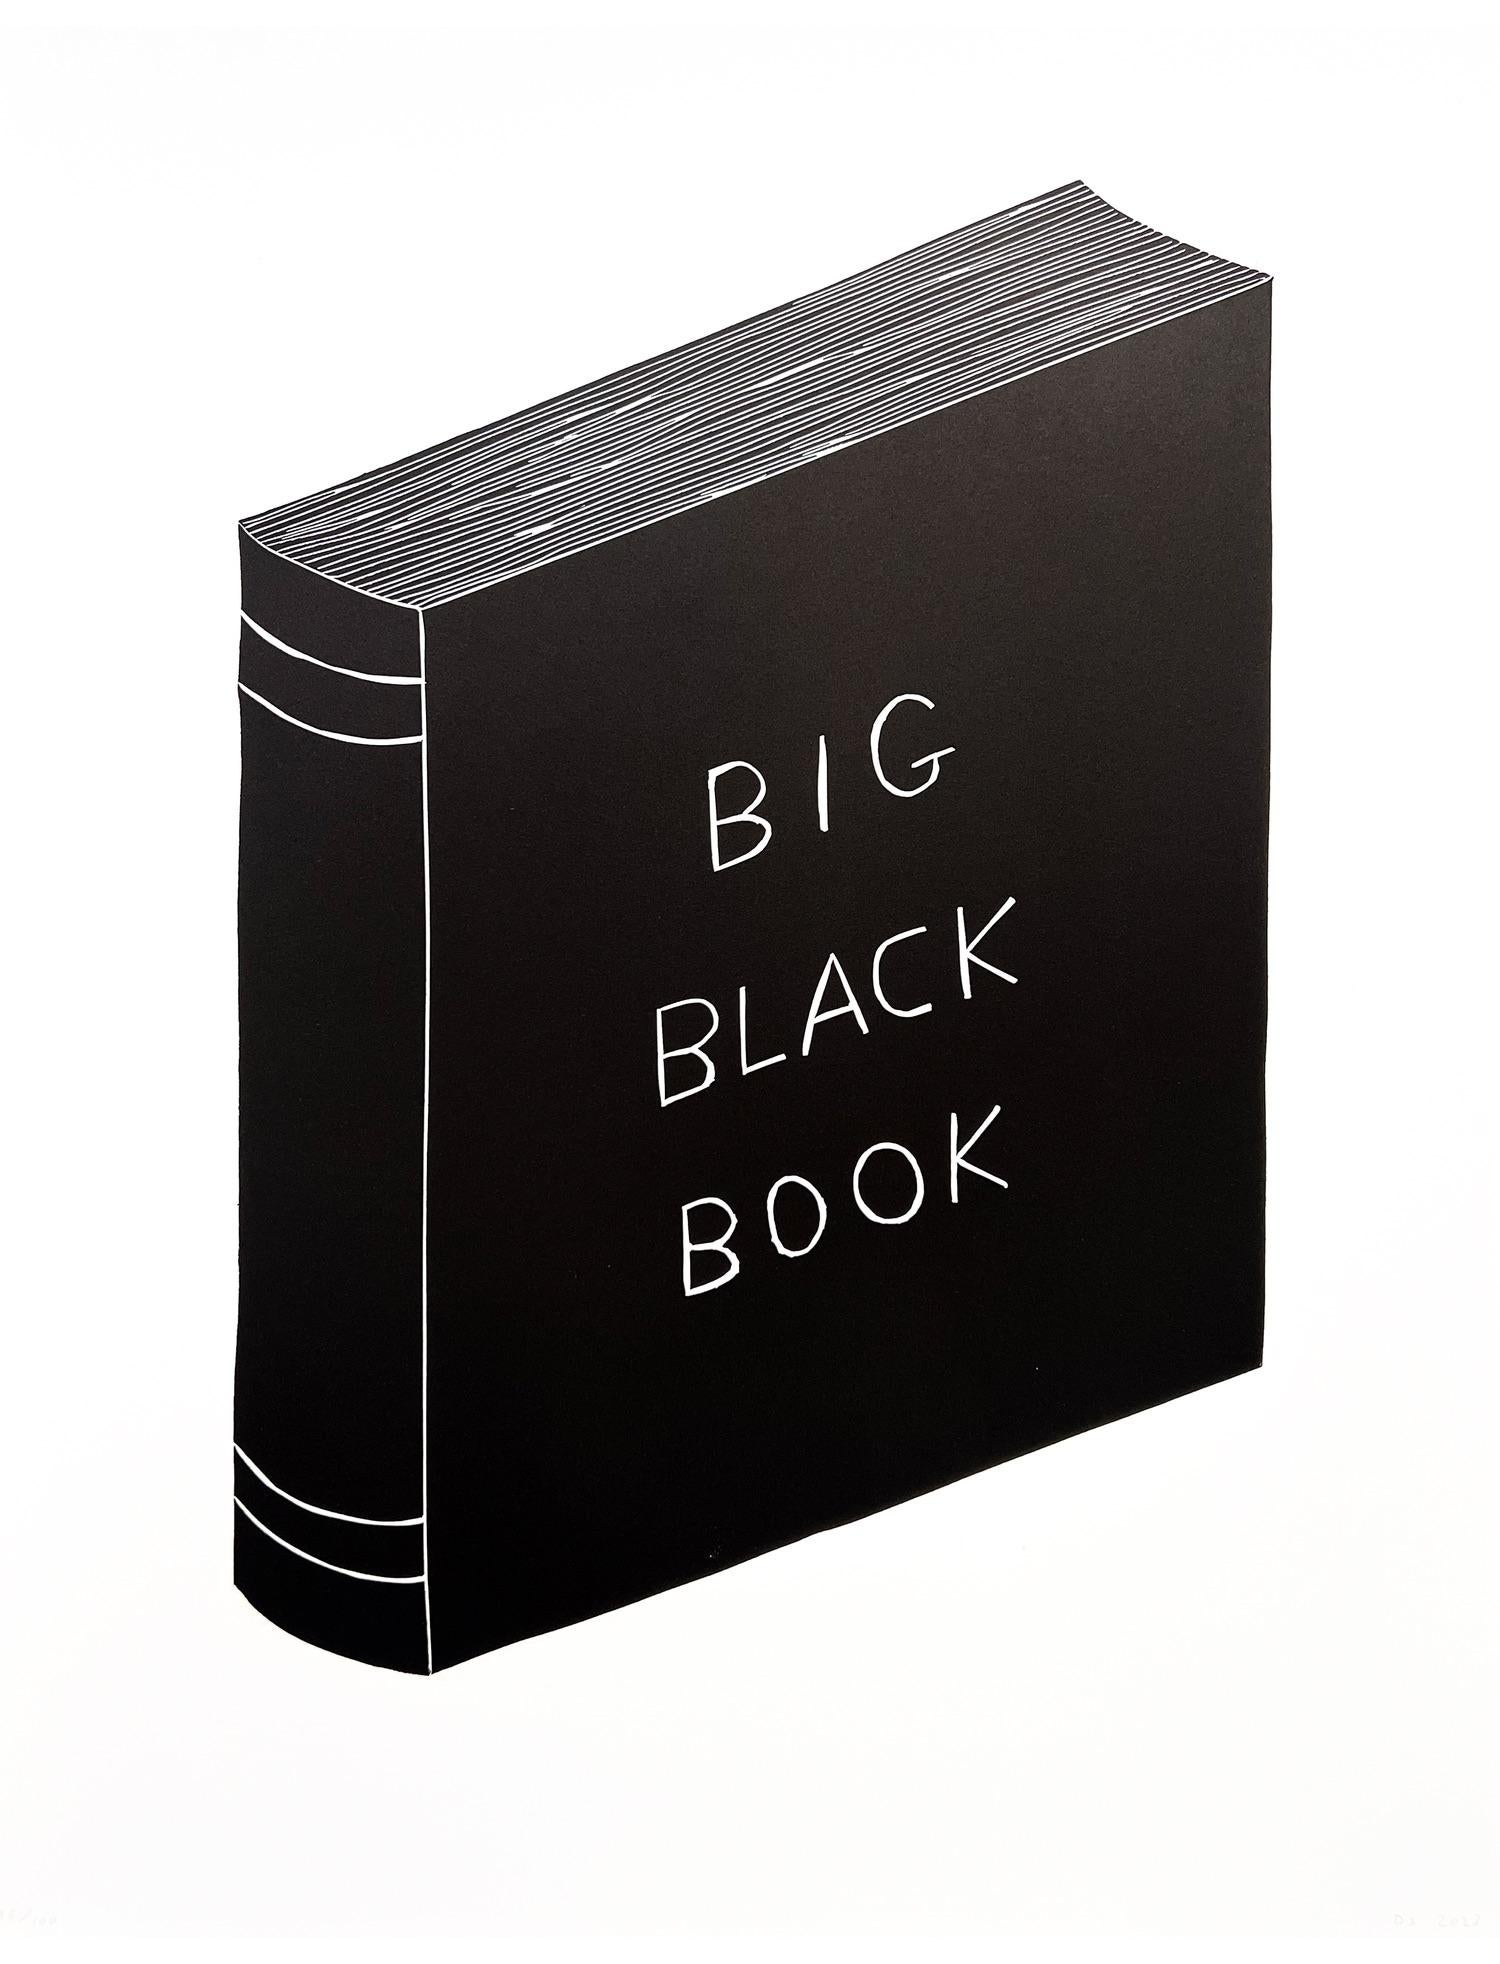 David Shrigley
Big Black Book, 2023
Format 50 x 65 cm
Paper: Somerset 300 gr.
Edition of 100